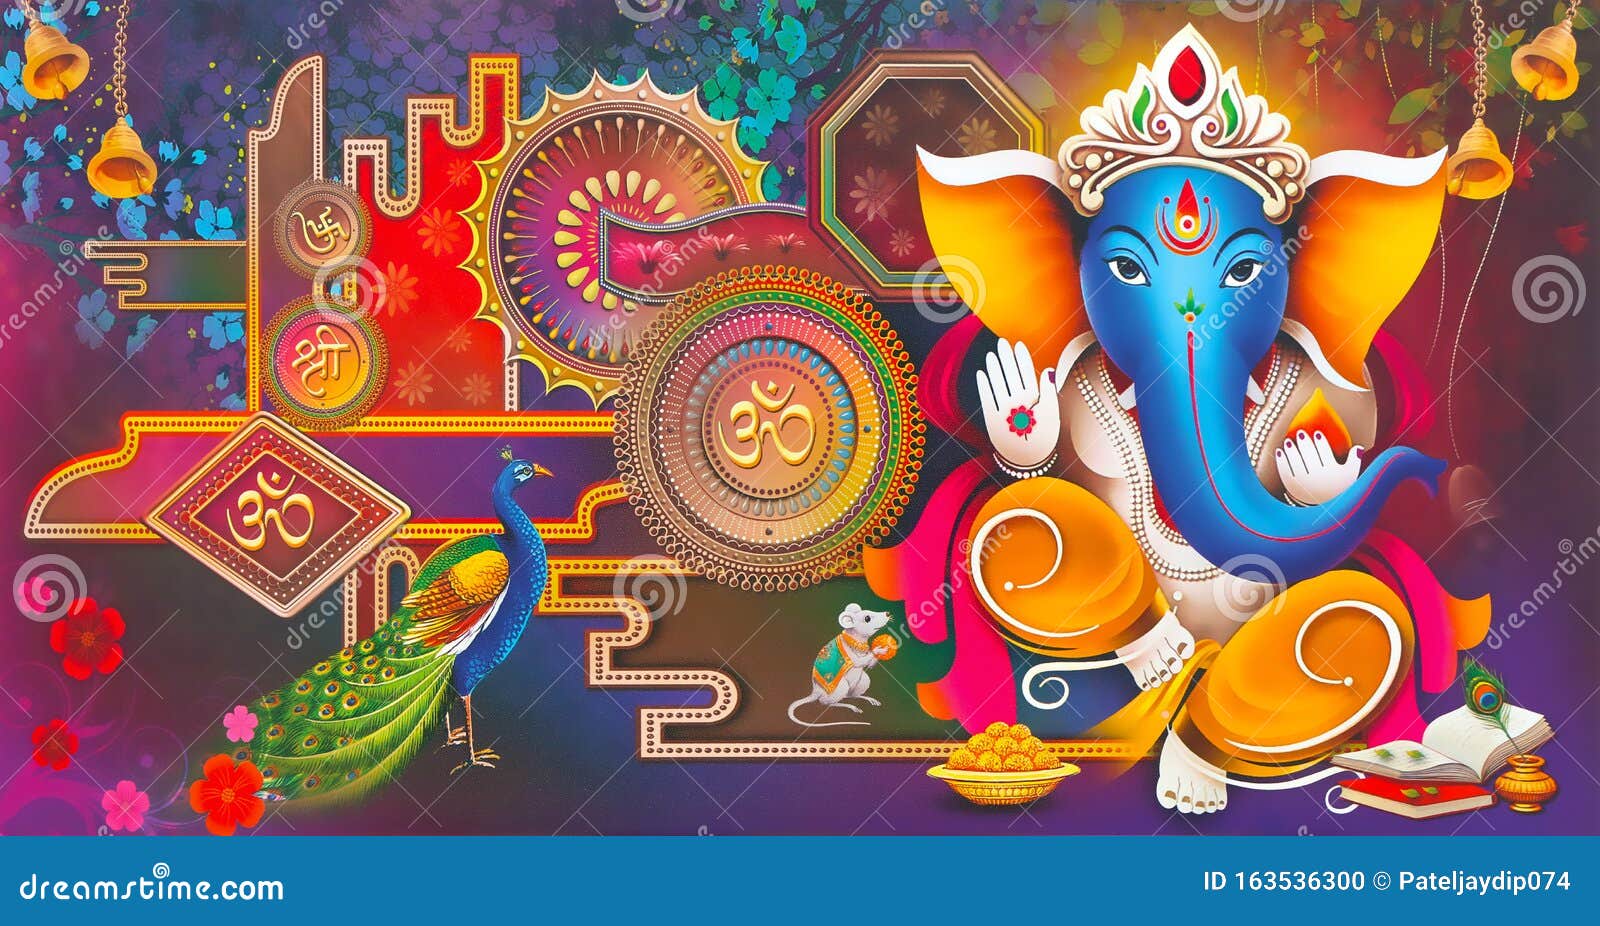 creative stage background design for ganesh chaturthi  naveengfx